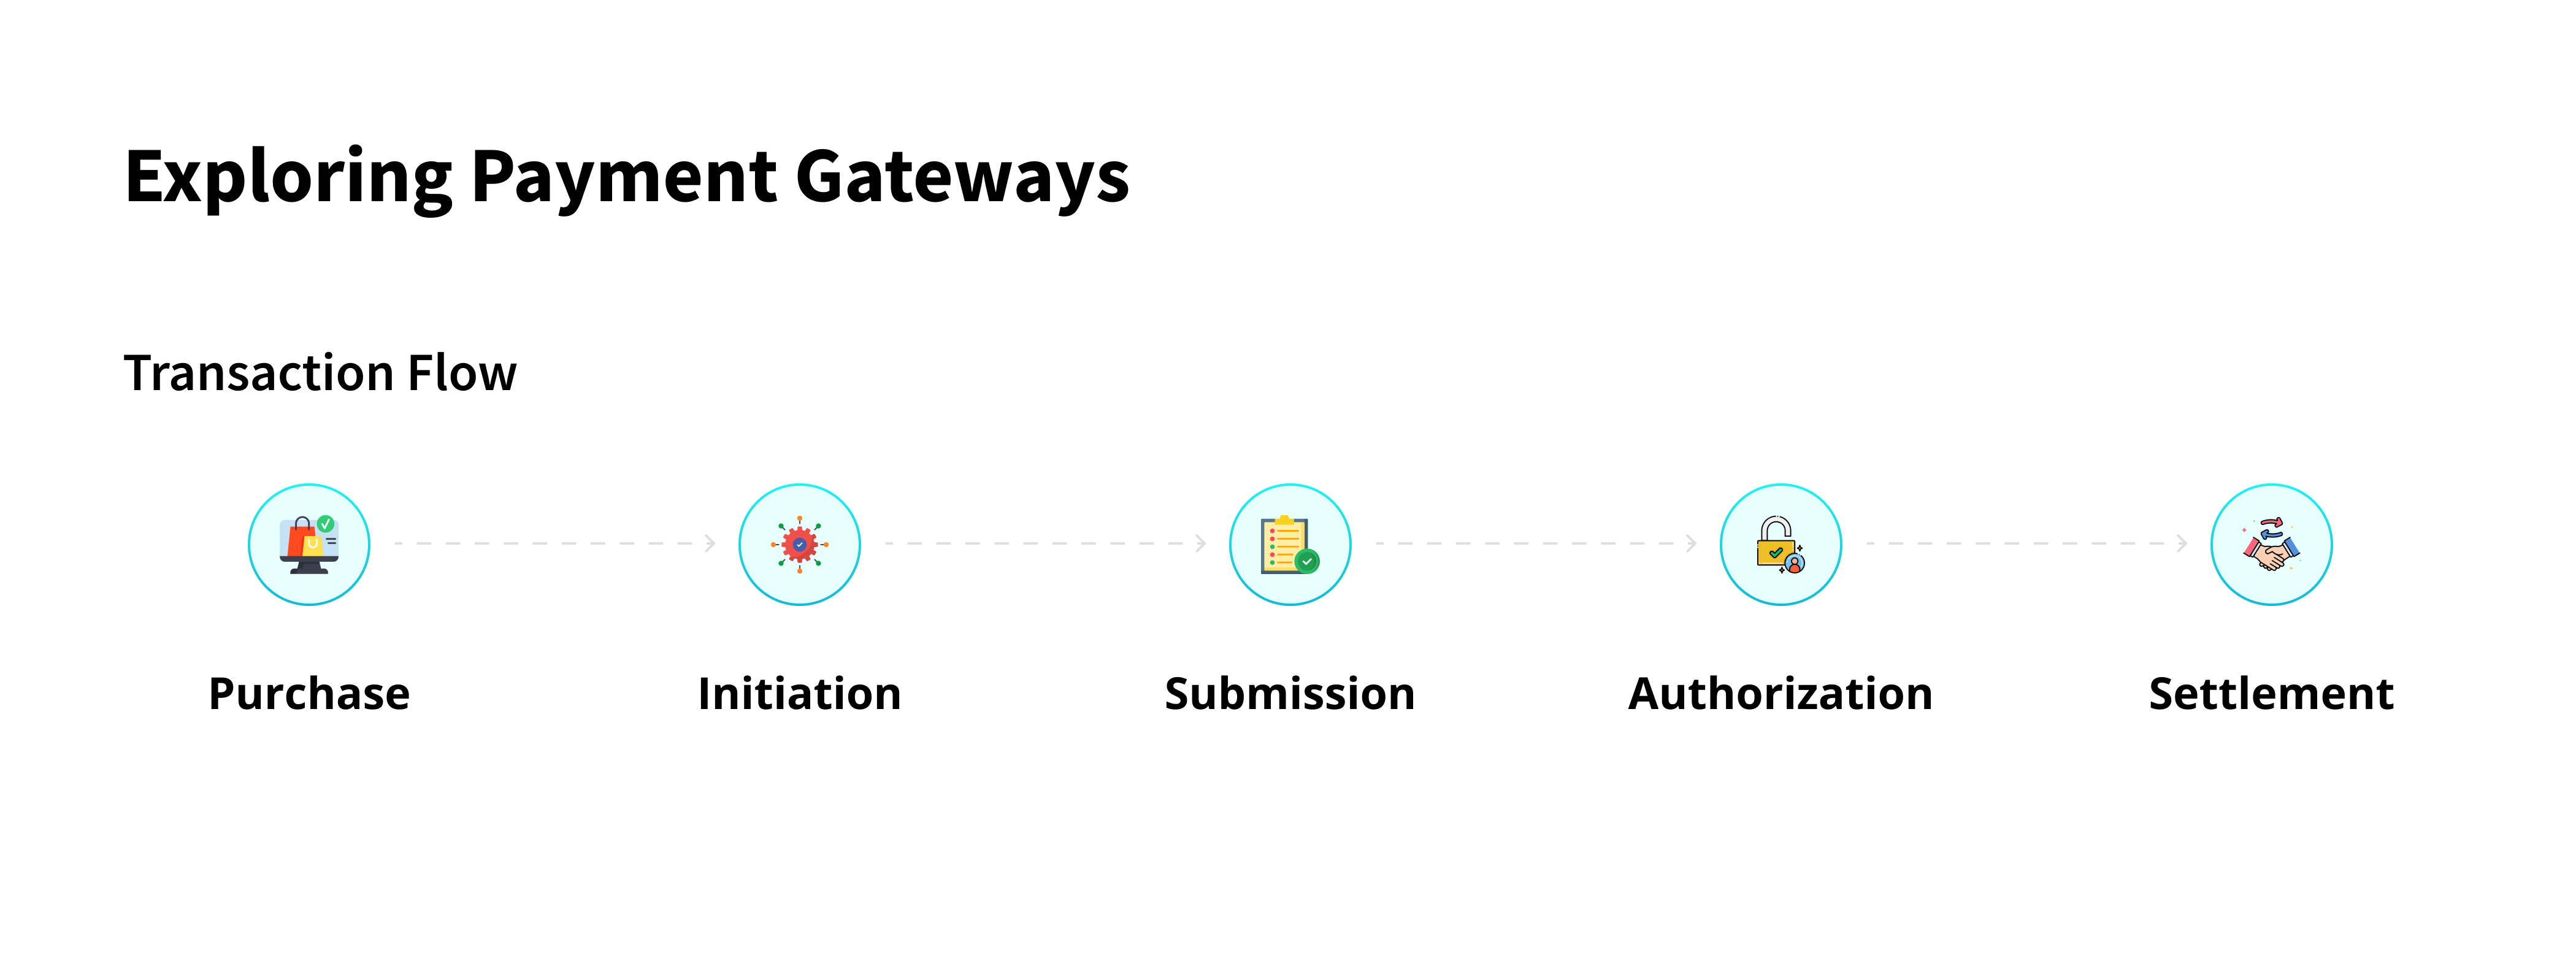 Payment Gateway: Transaction Flow